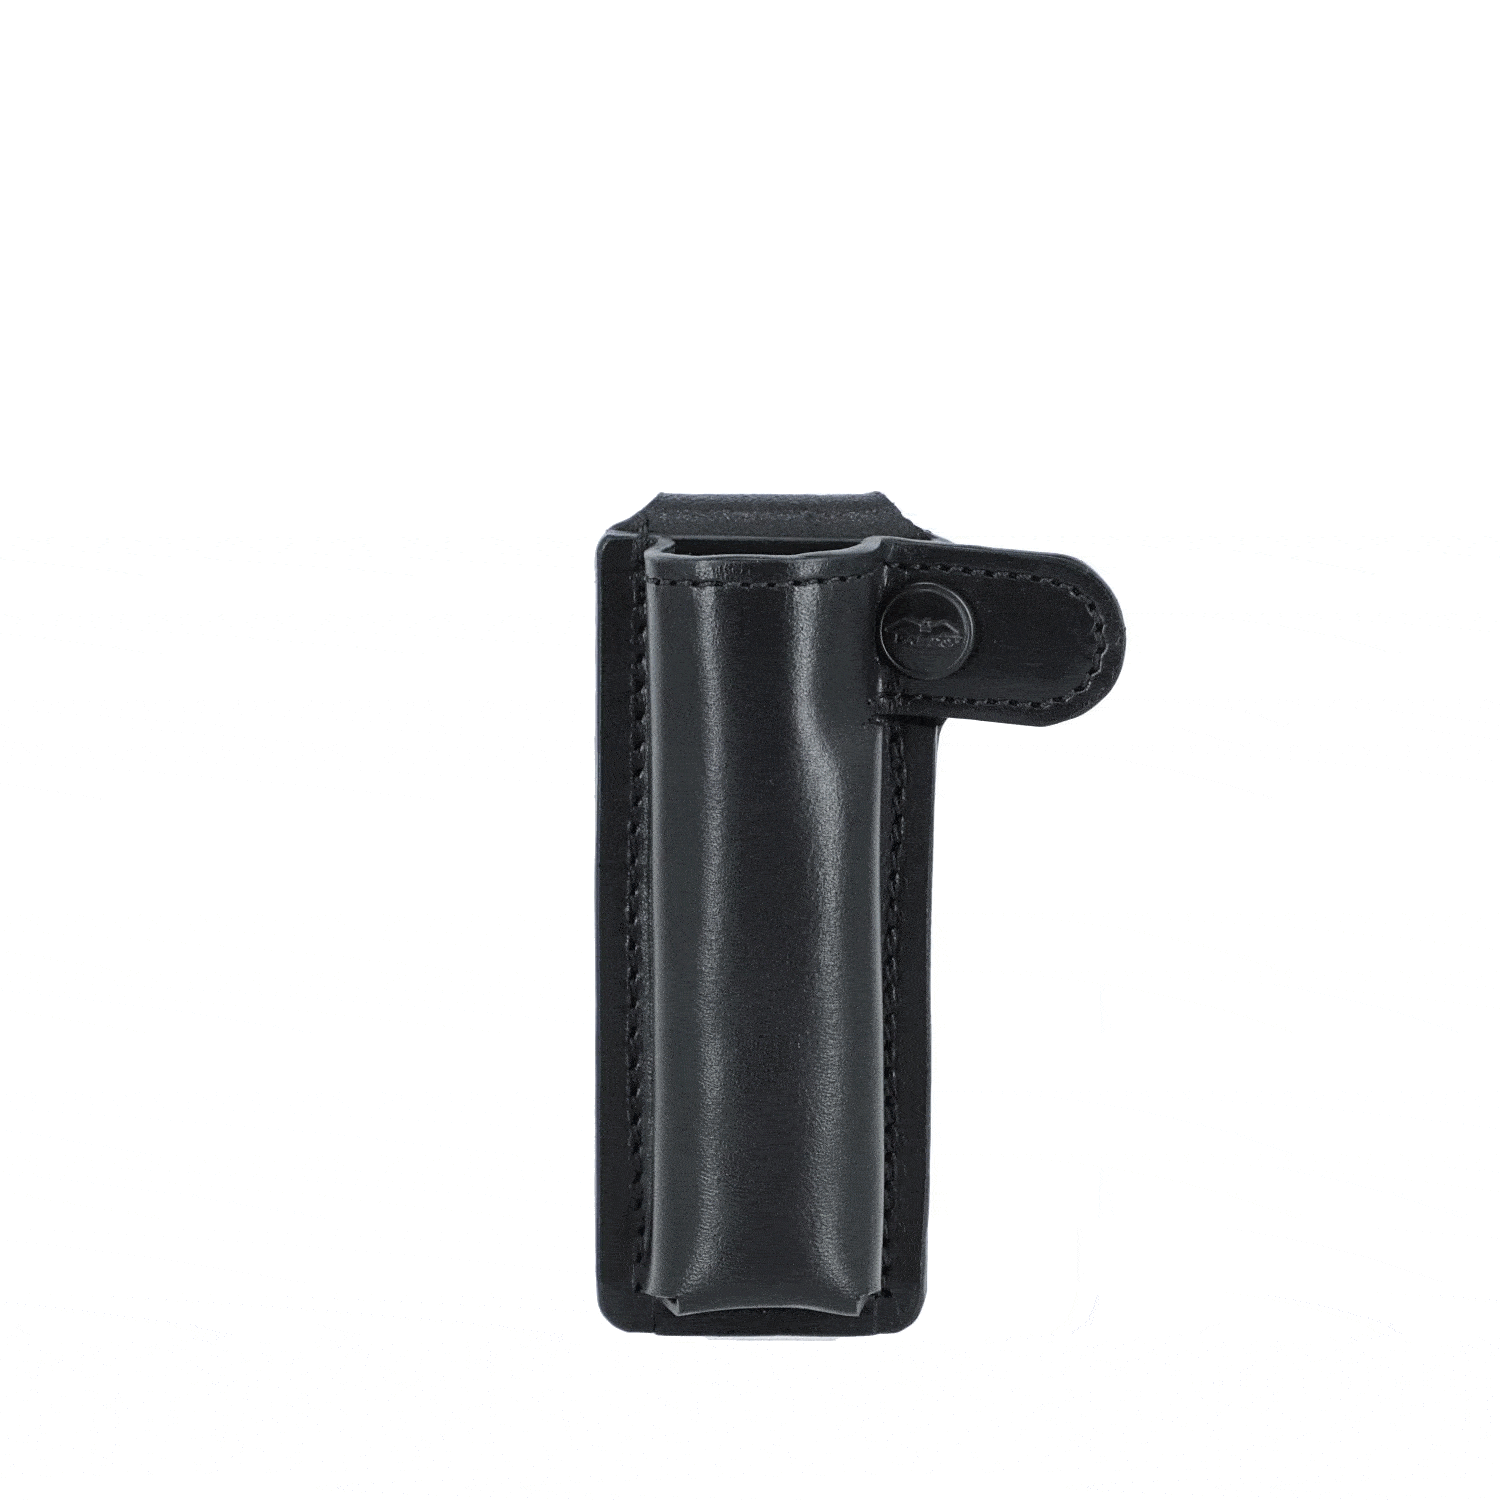 Duty leather baton holder